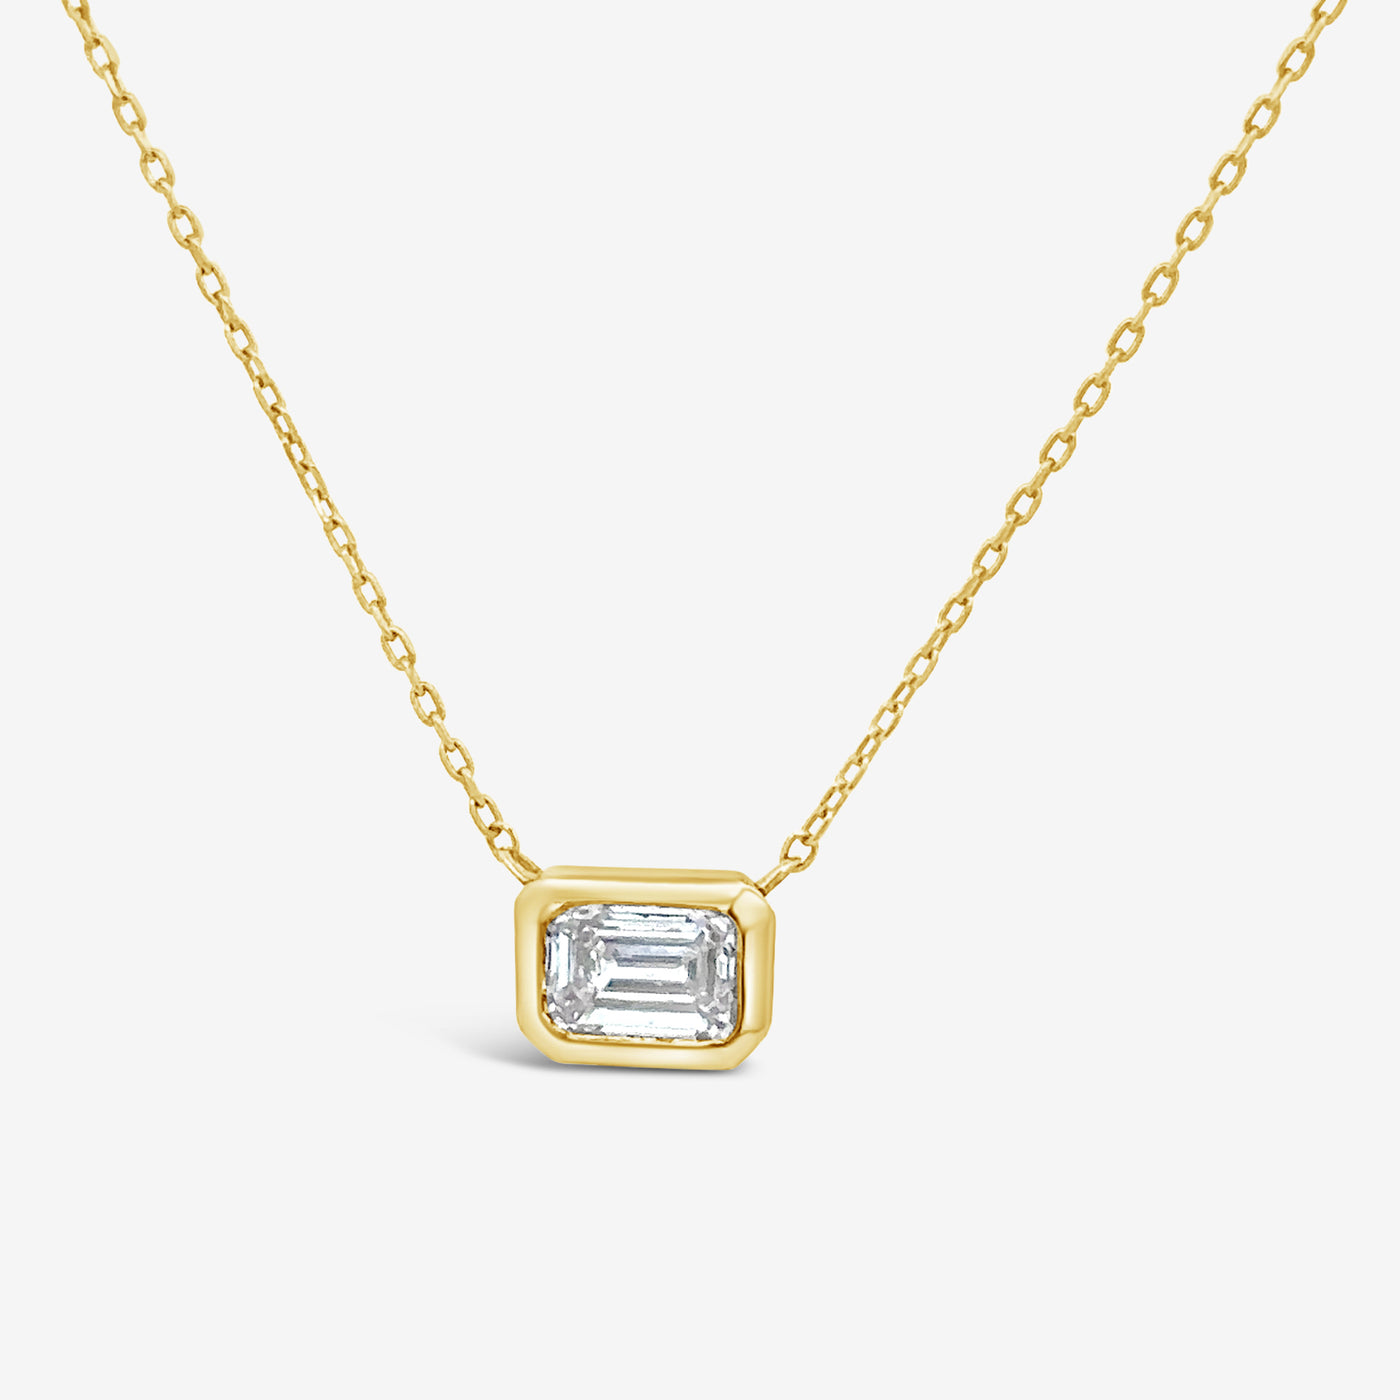 East West 0.40CT Emerald Cut Diamond Necklace